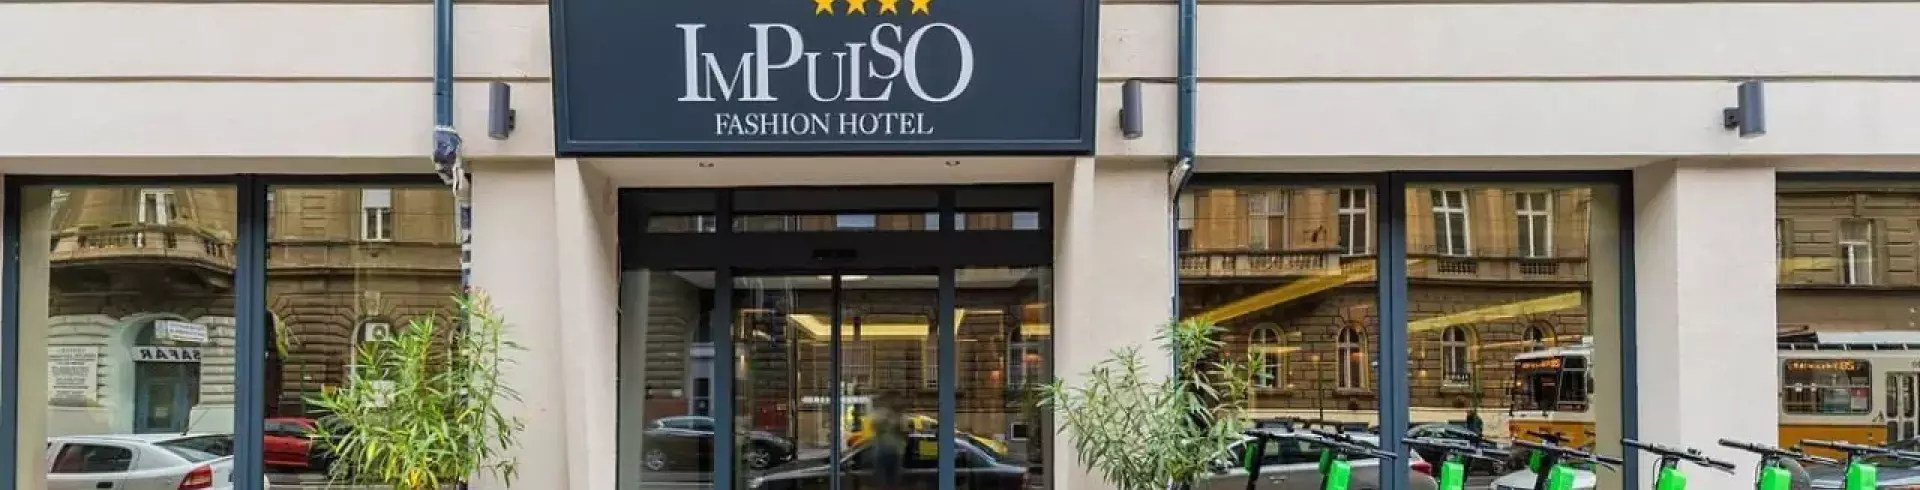 Impulso Fashion Hotel